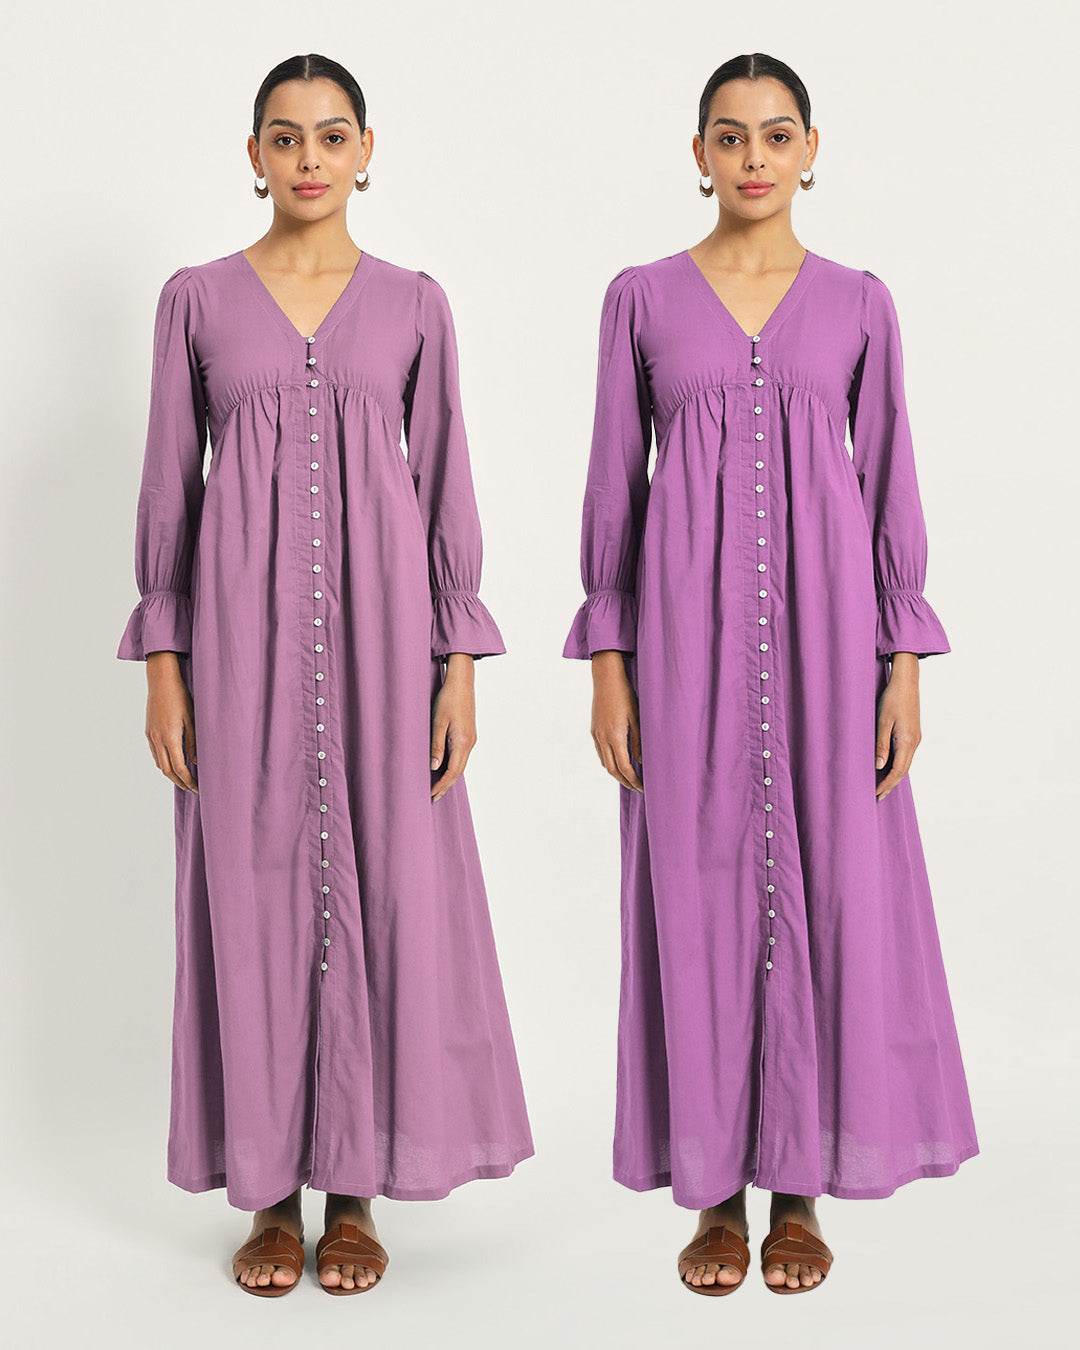 Combo: Iris Pink & Wisteria Purple Day-Night Ease Nightdress